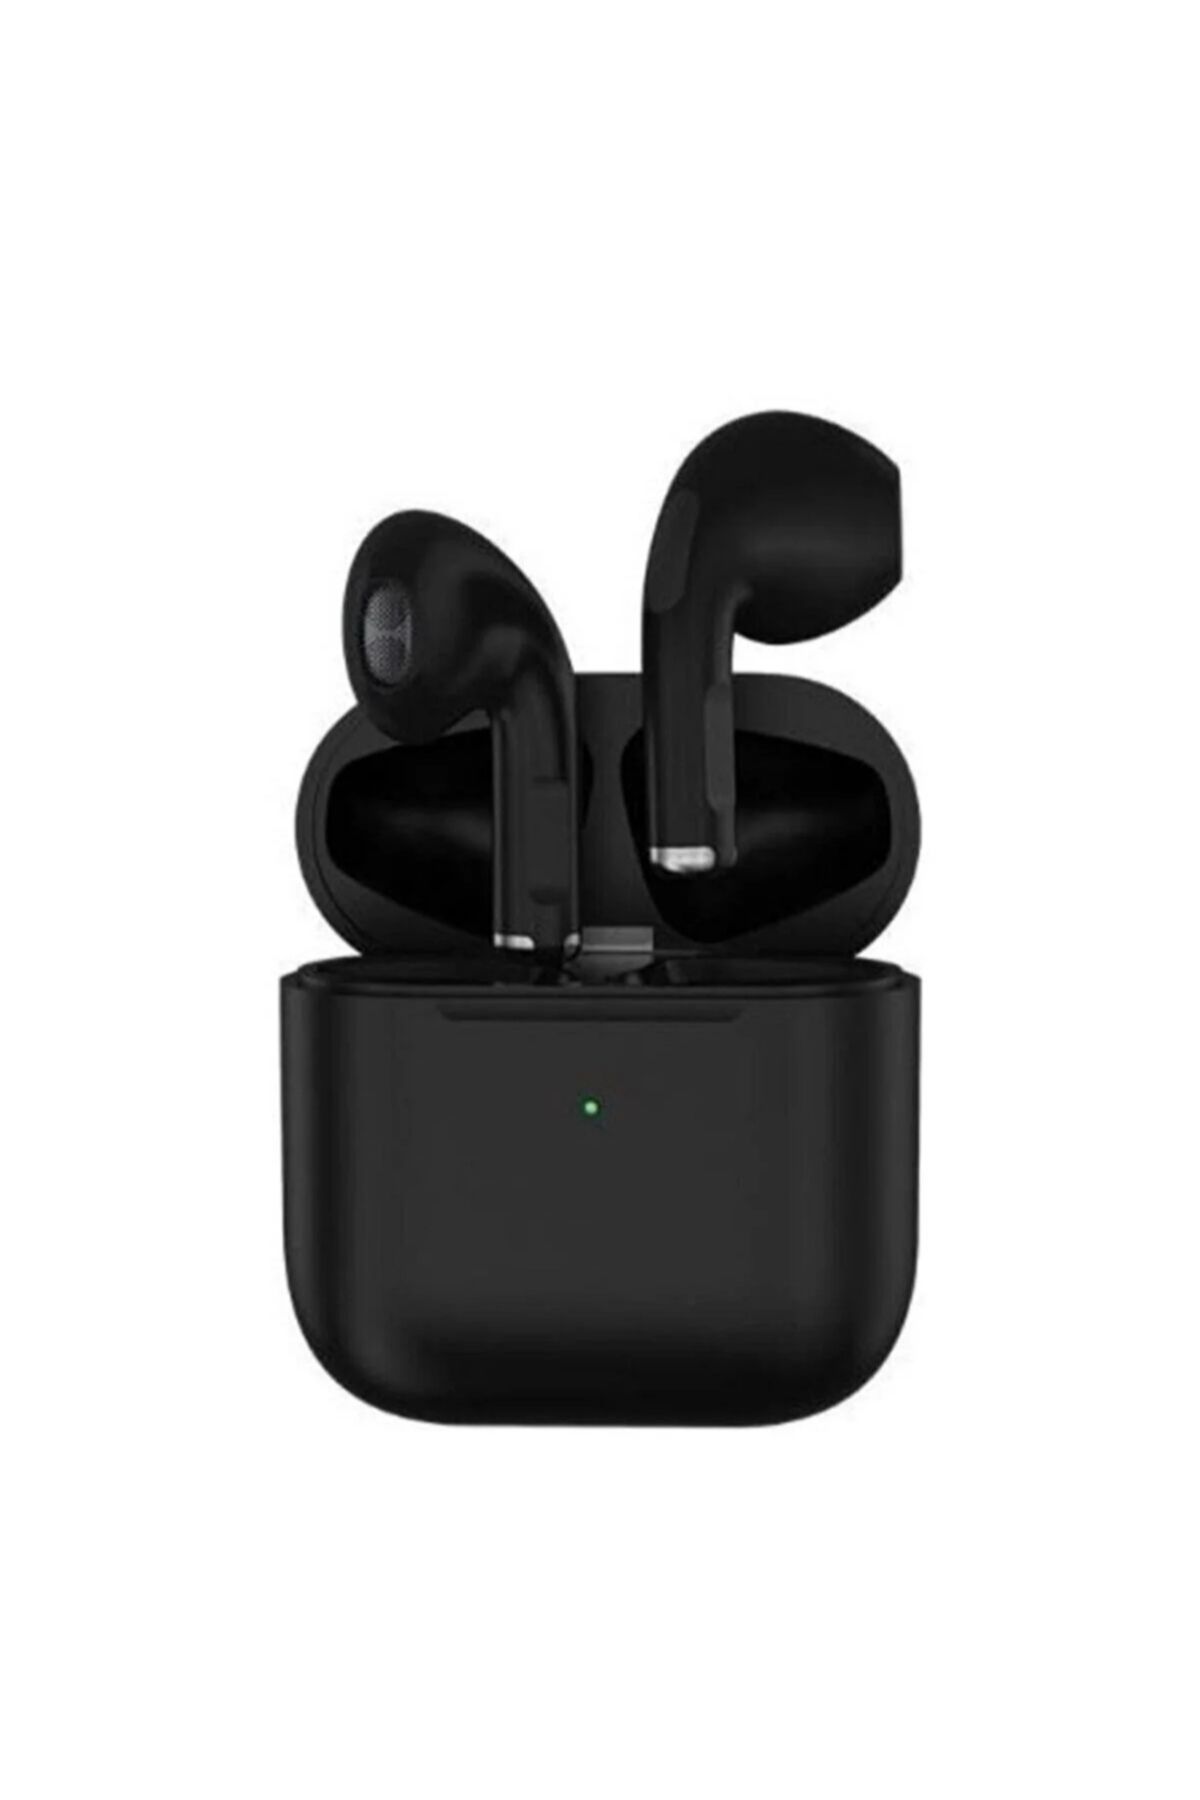 Teknolojimburada Pro 5s Plus Bluetooth Kulaklık